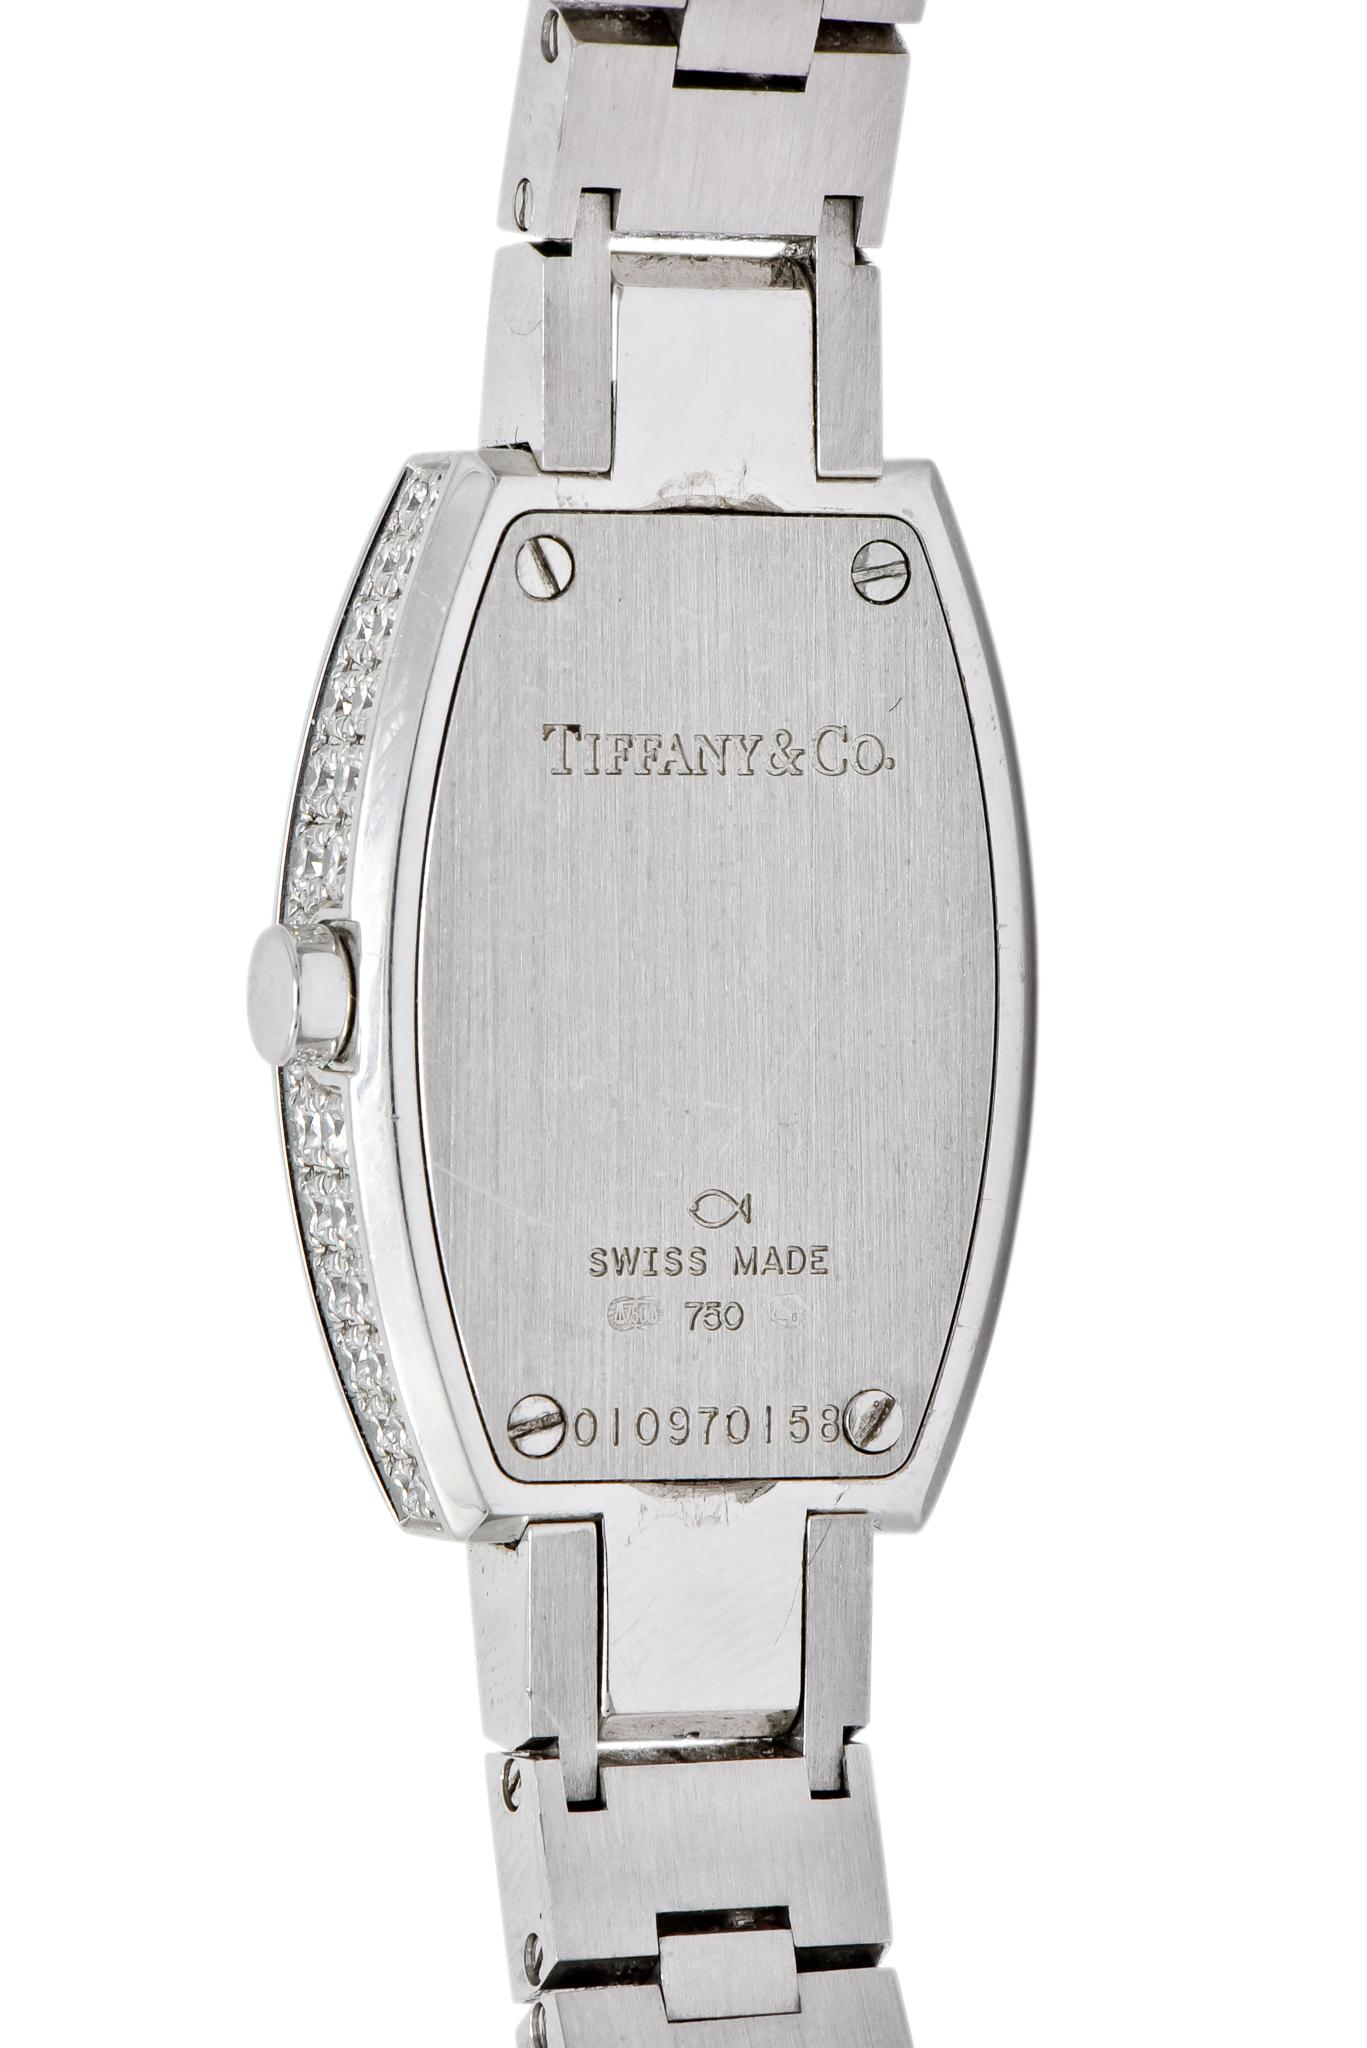 Tiffany & Co. 8.20 Carat Diamond 18 Karat White Gold Tonneau Ladies Watch 2